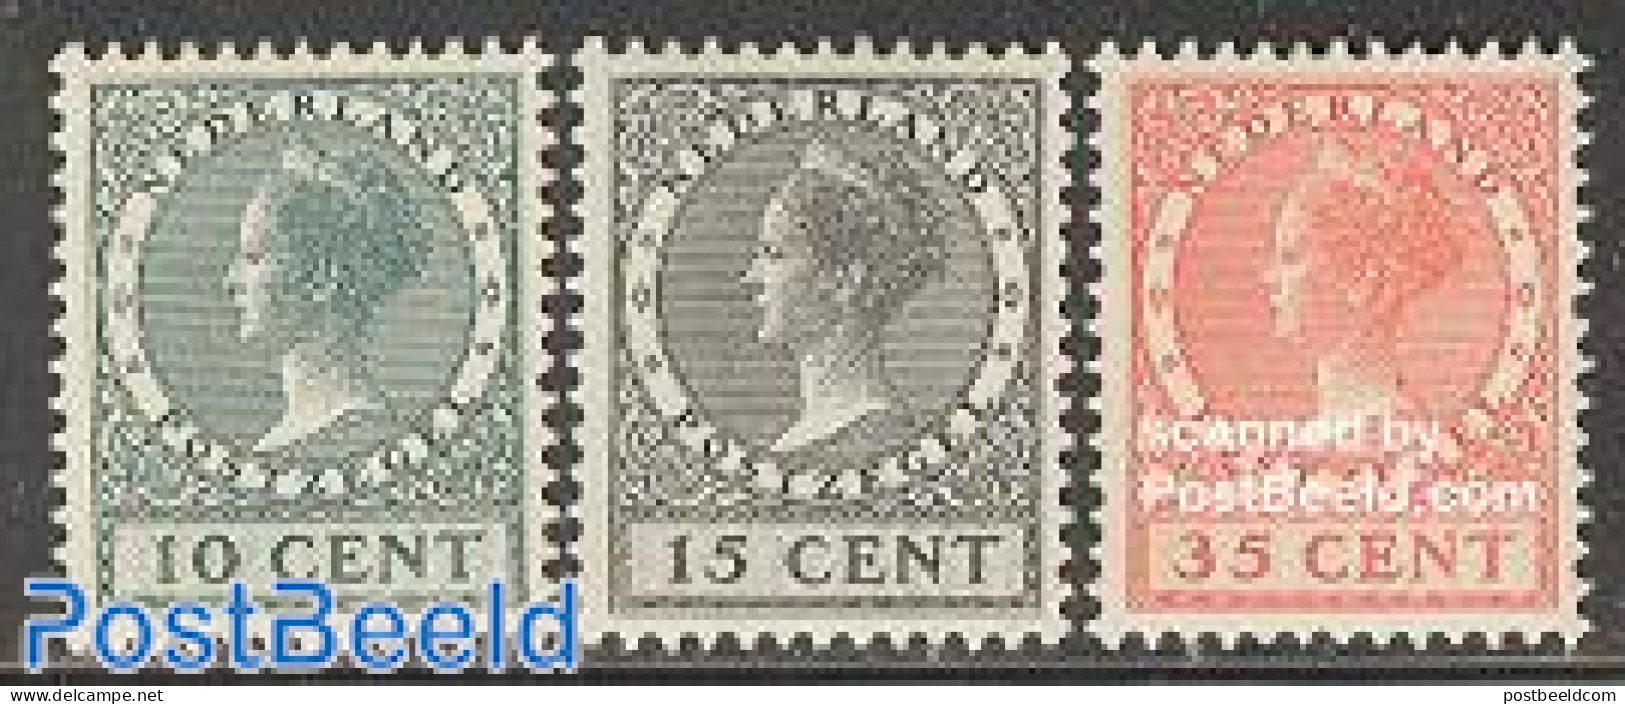 Netherlands 1924 Stamp Exposition 3v, Unused (hinged), Philately - Unused Stamps